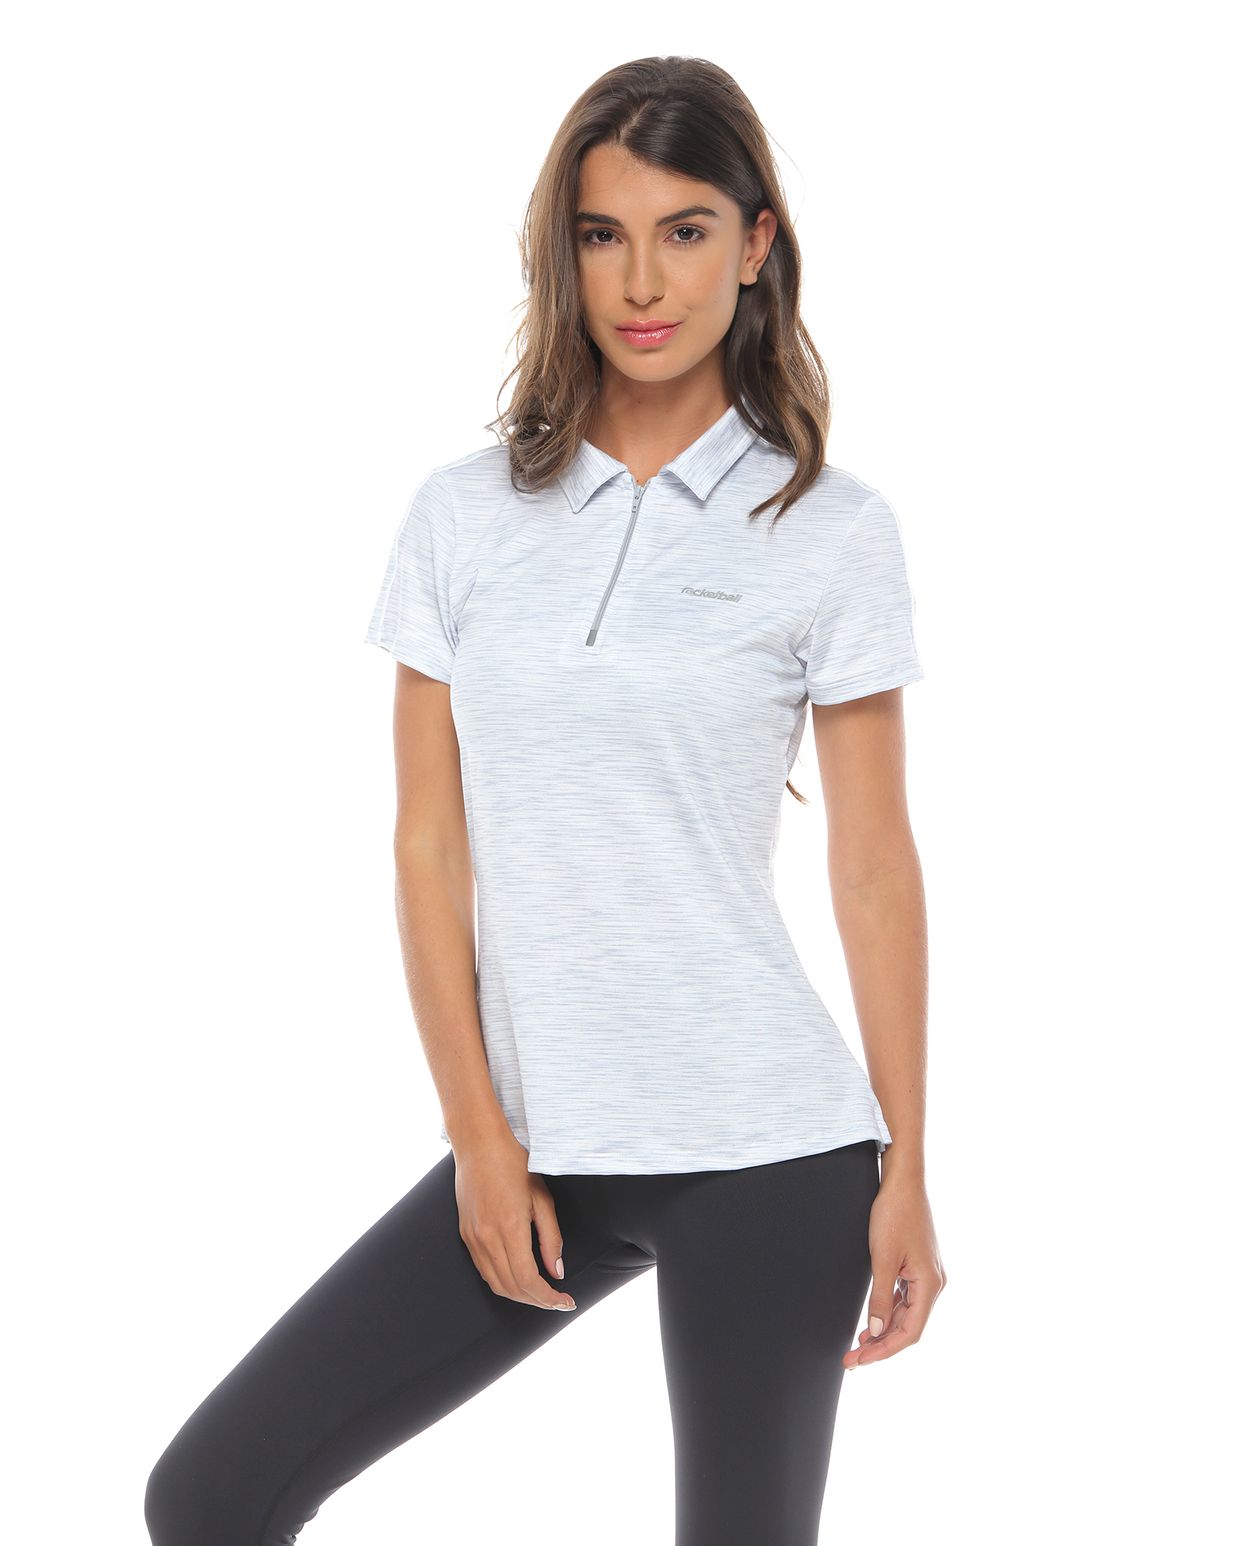 Camisetas tipo polo de mujer, color I Racketball - racketball movil